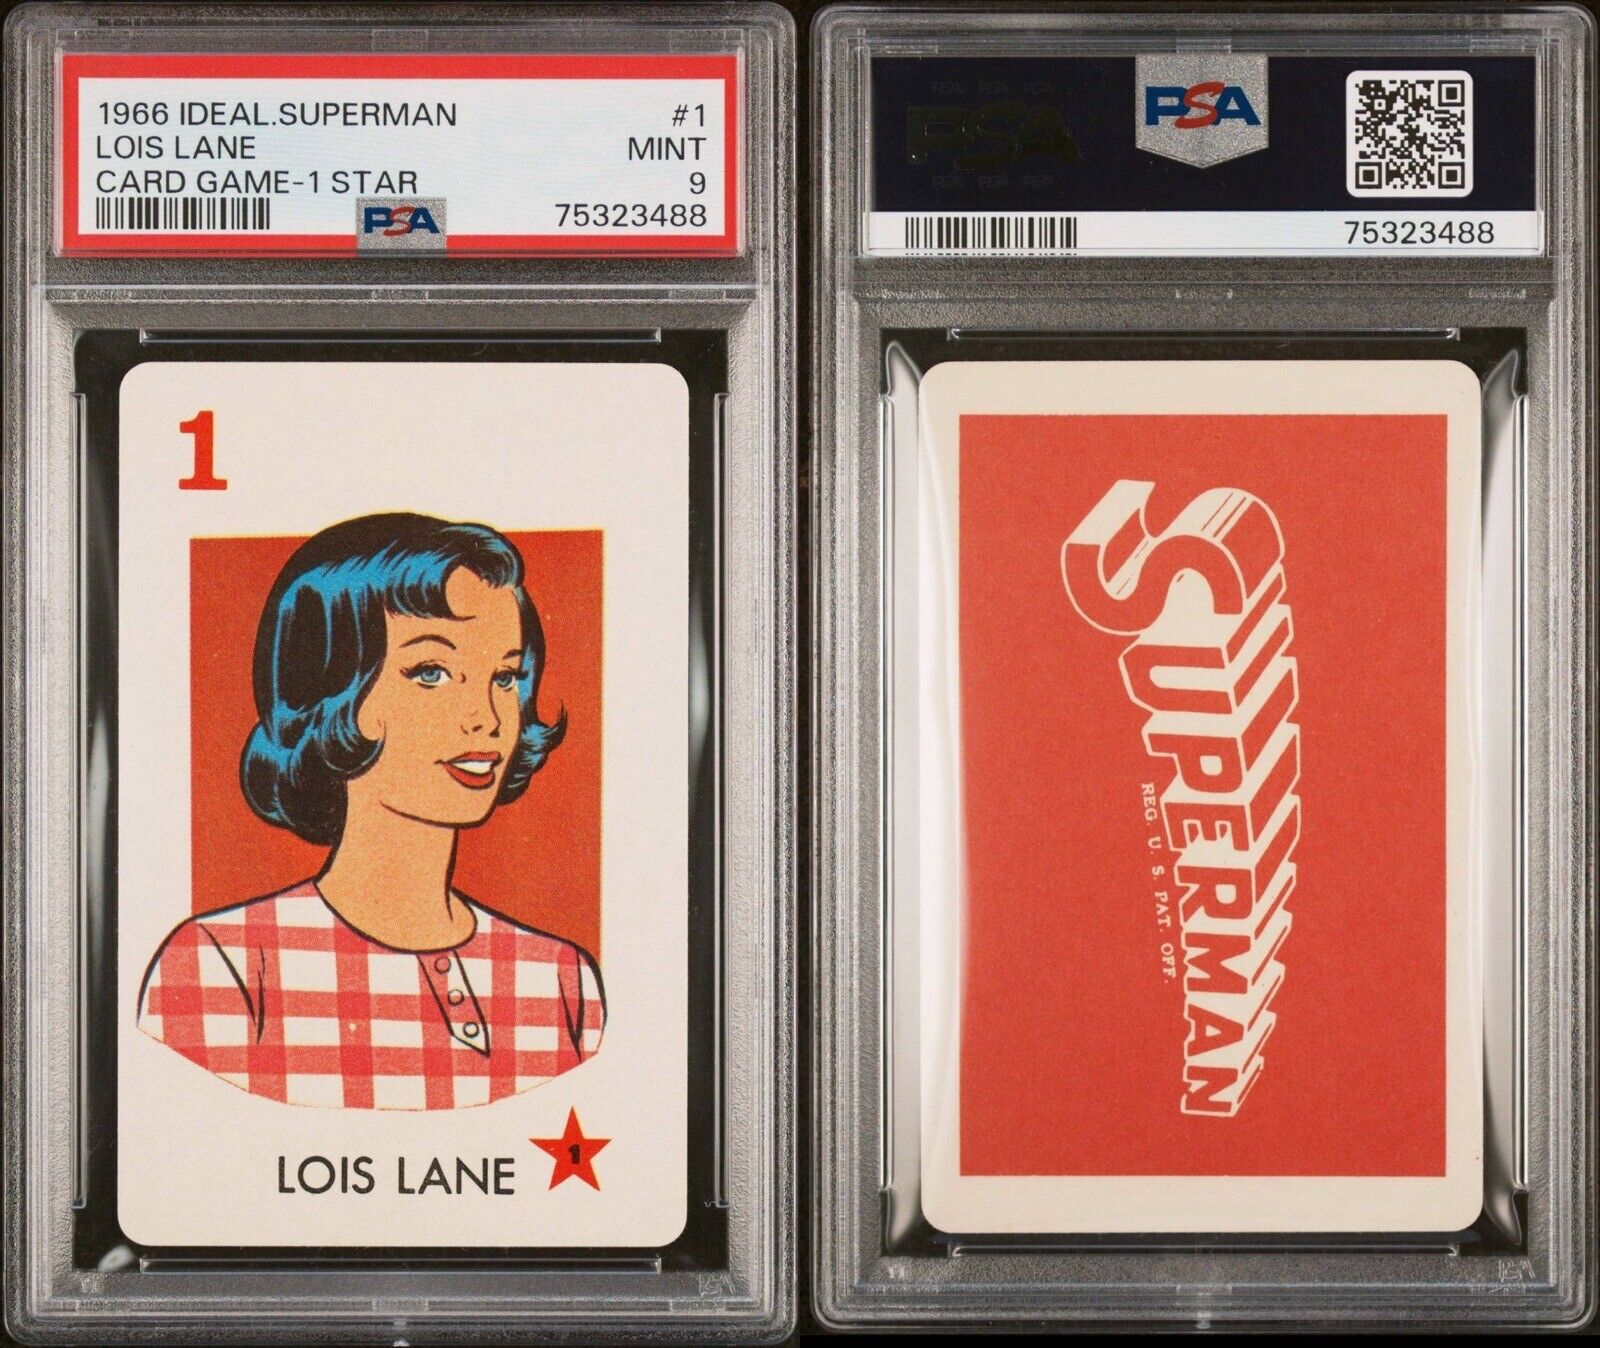 RARE VINTAGE 1966 IDEAL SUPERMAN LOIS LANE CARD GAME ROOKIE PSA 9 MINT